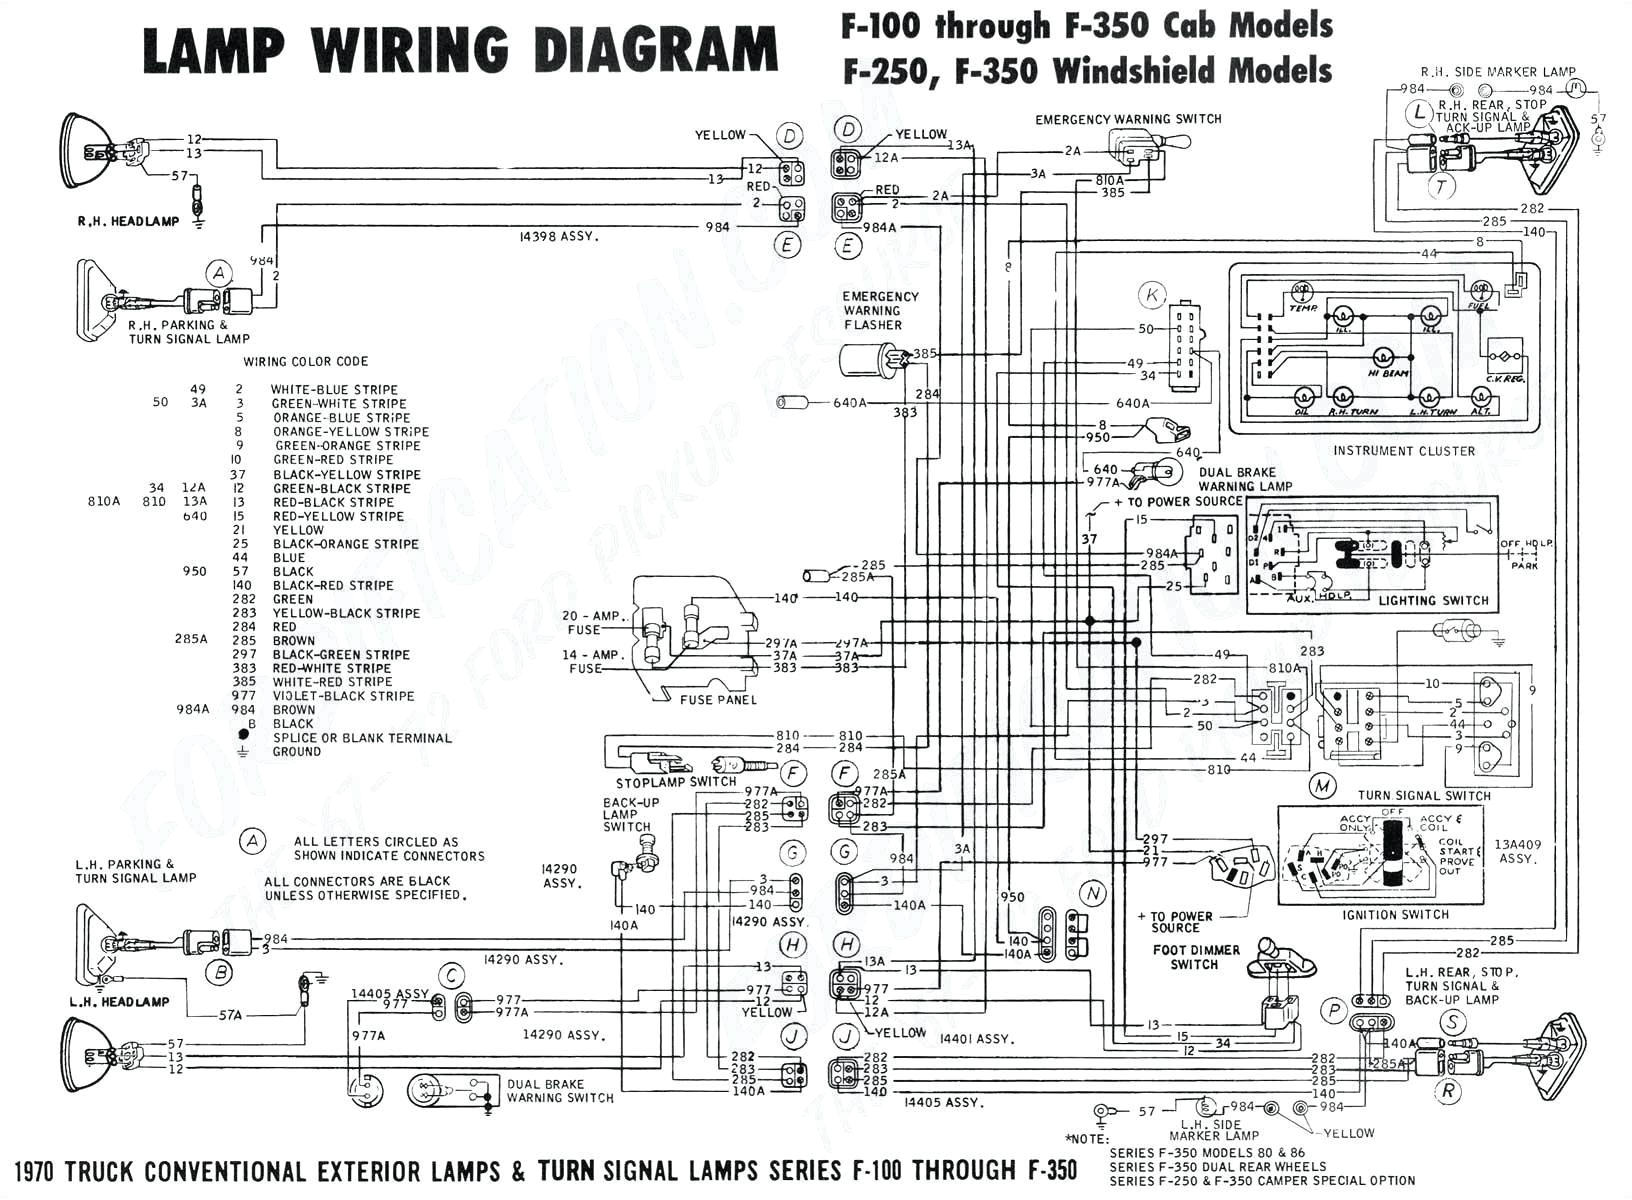 dc wire harness schematic wiring diagram info dc wire harness schematic